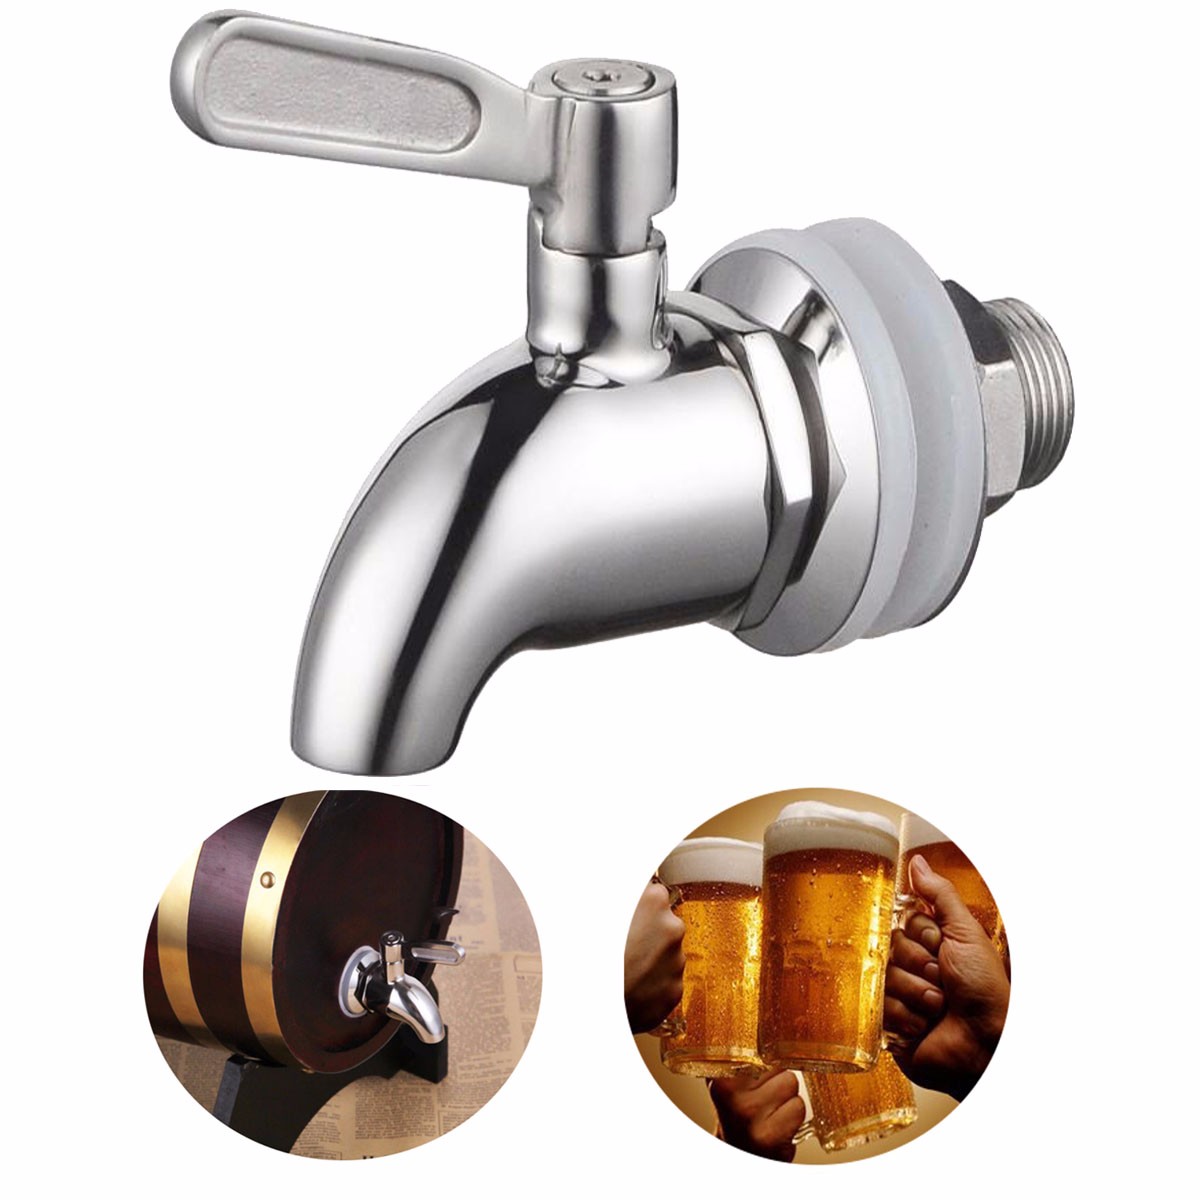 Stainless-Steel-Faucet-Tap-for-15-23mm-Home-Brew-Barrel-Fermenter-Wine-Beer-Fridge-Kegs-1321595